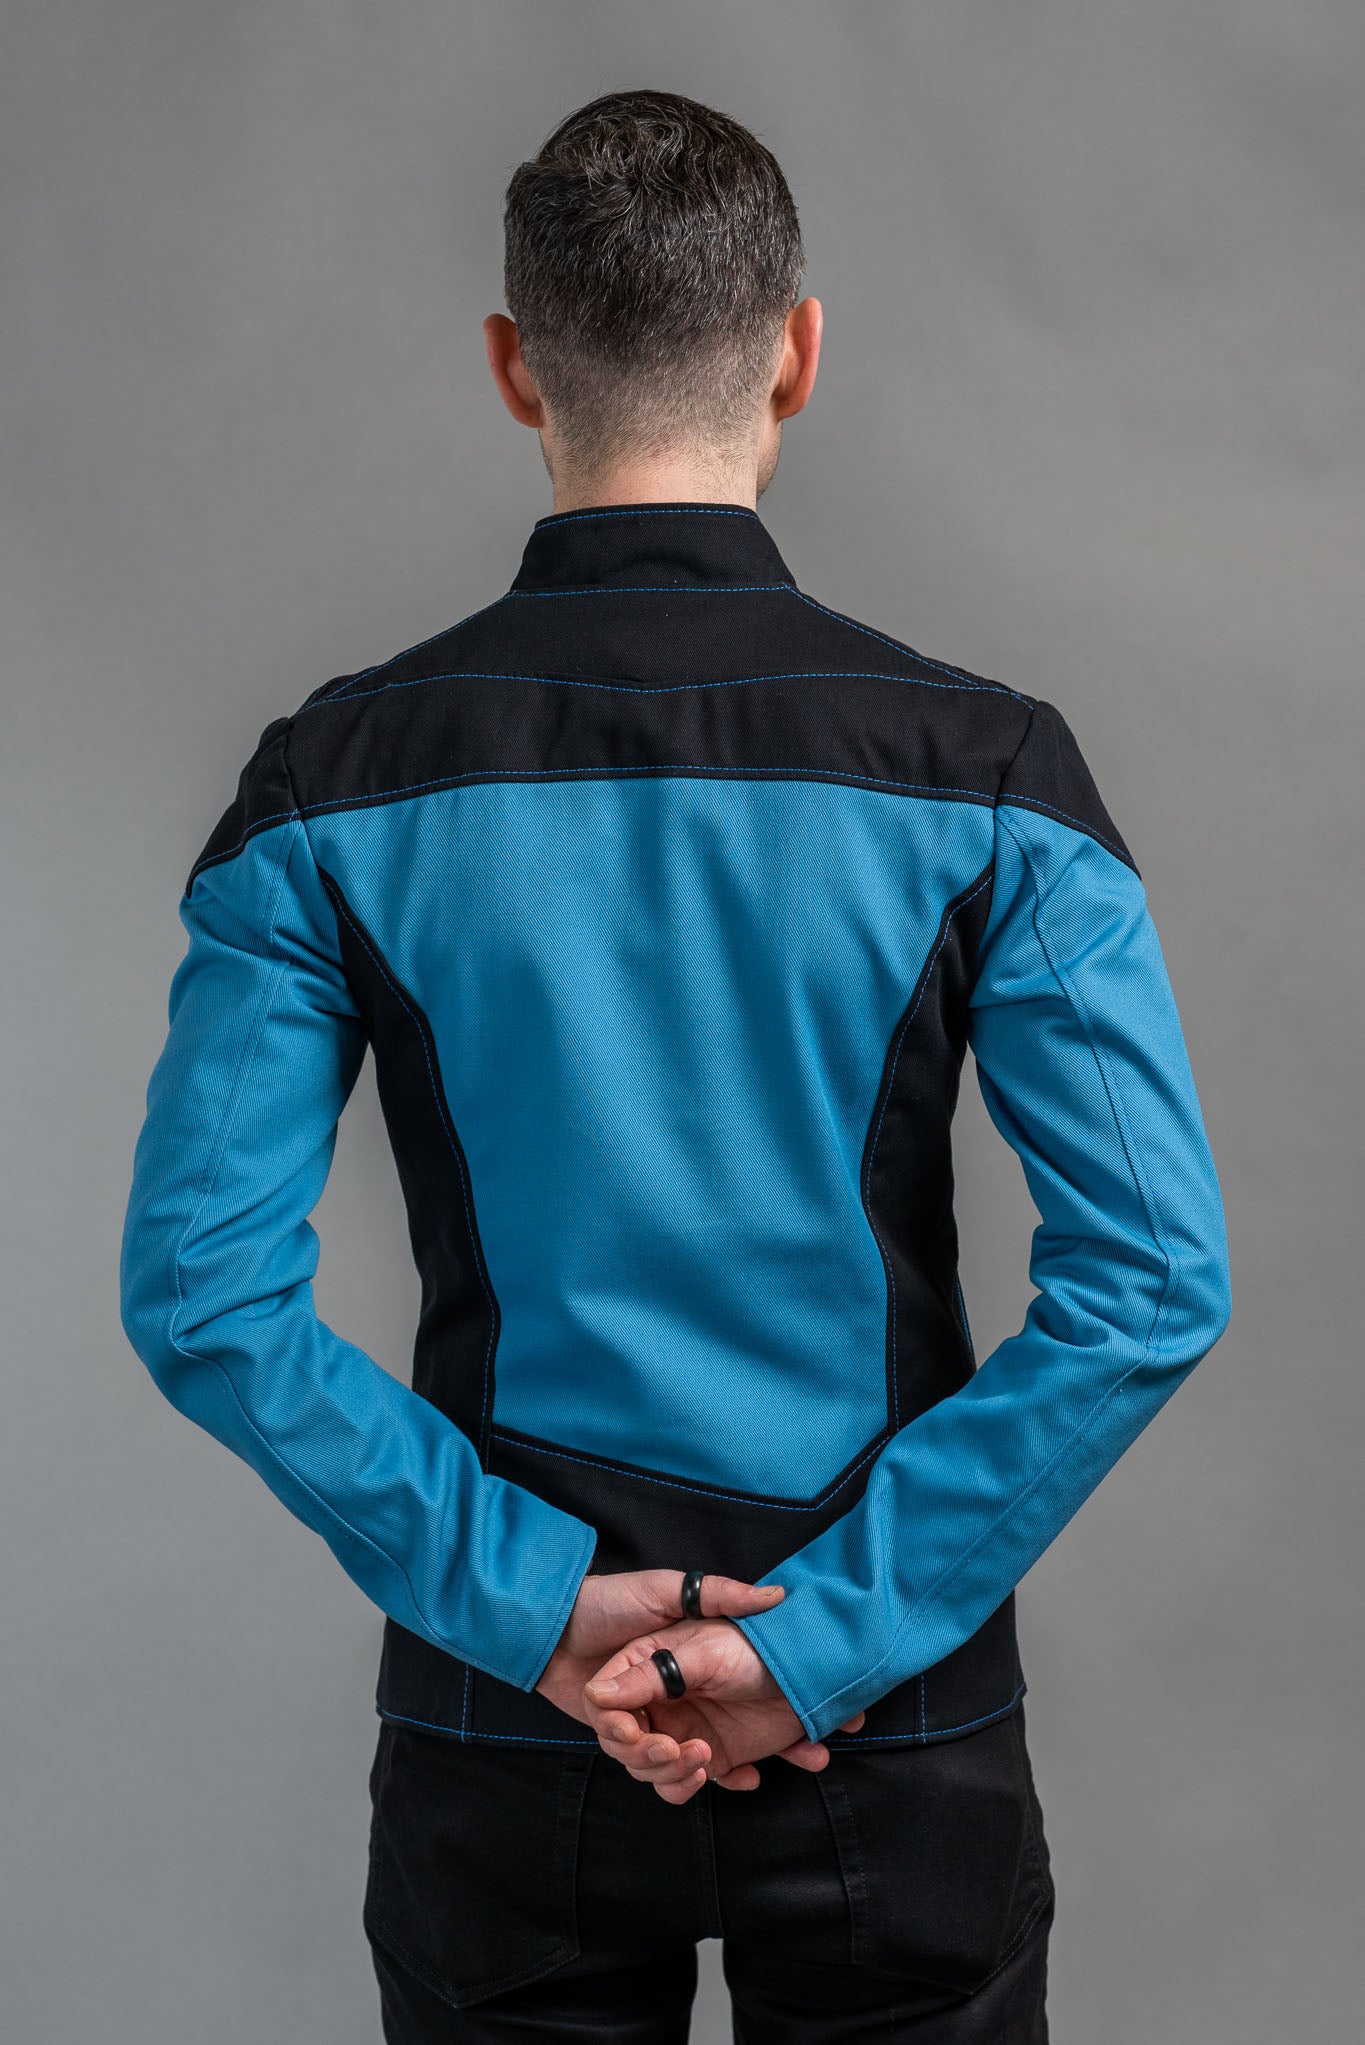 Starfleet 2364 - Sciences Blue [Mens]